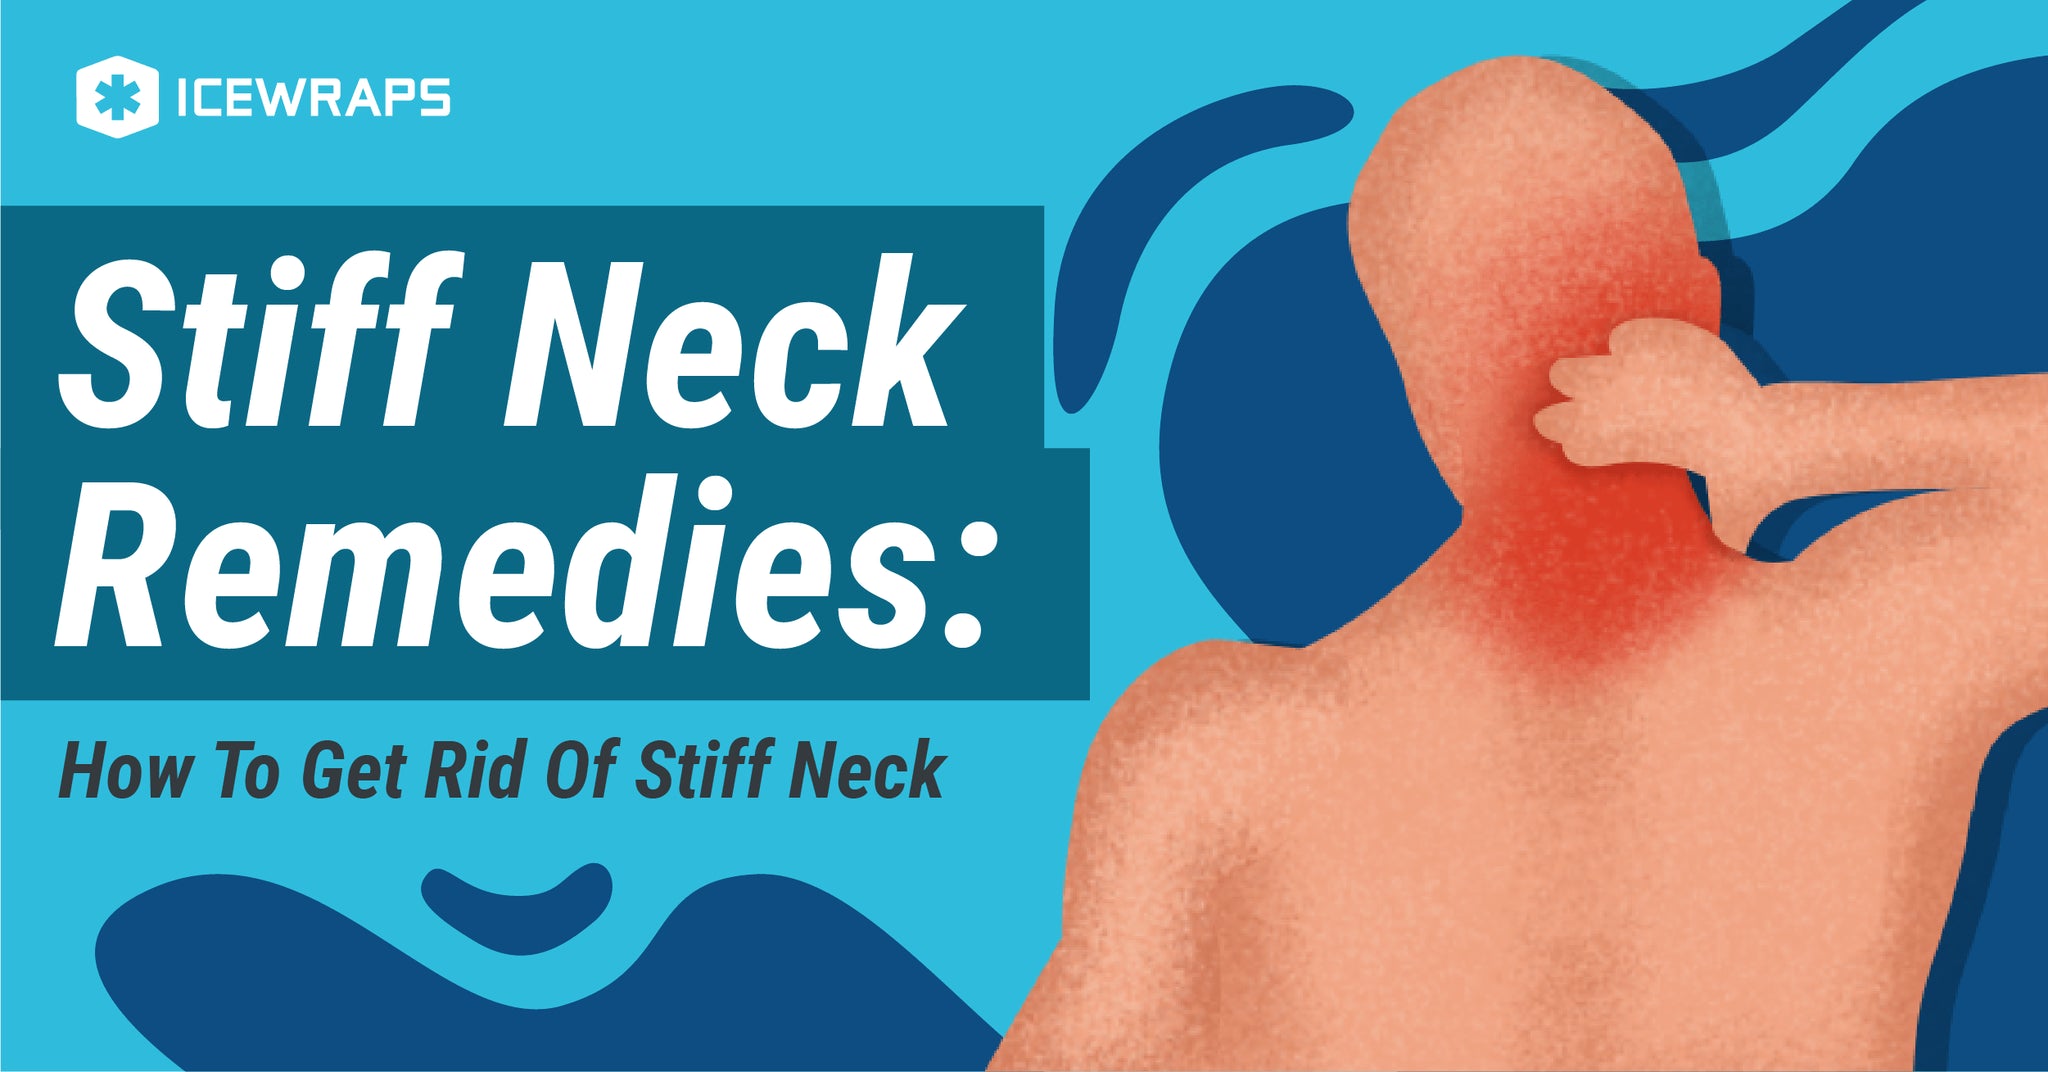 Stiff Neck Remedies: How To Get Rid Of Stiff Neck - IceWraps